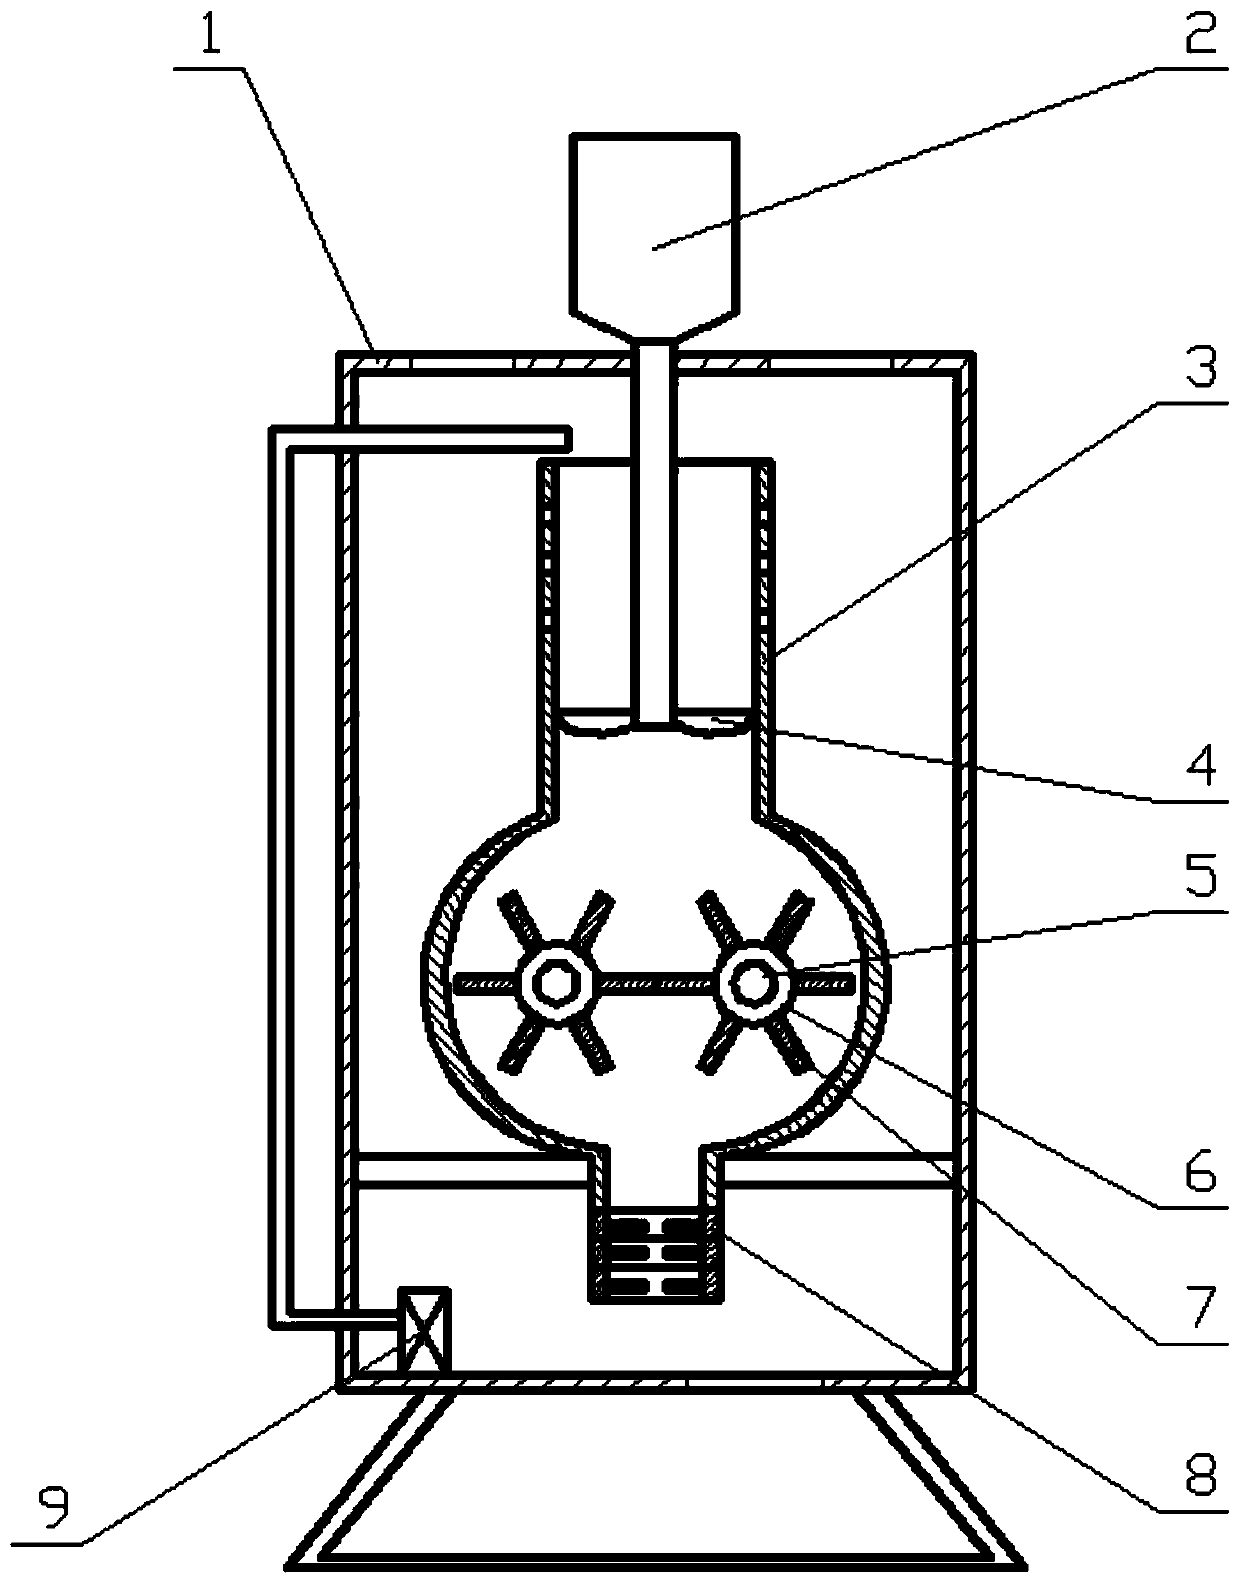 A water wheel type liquid circulation stirring device